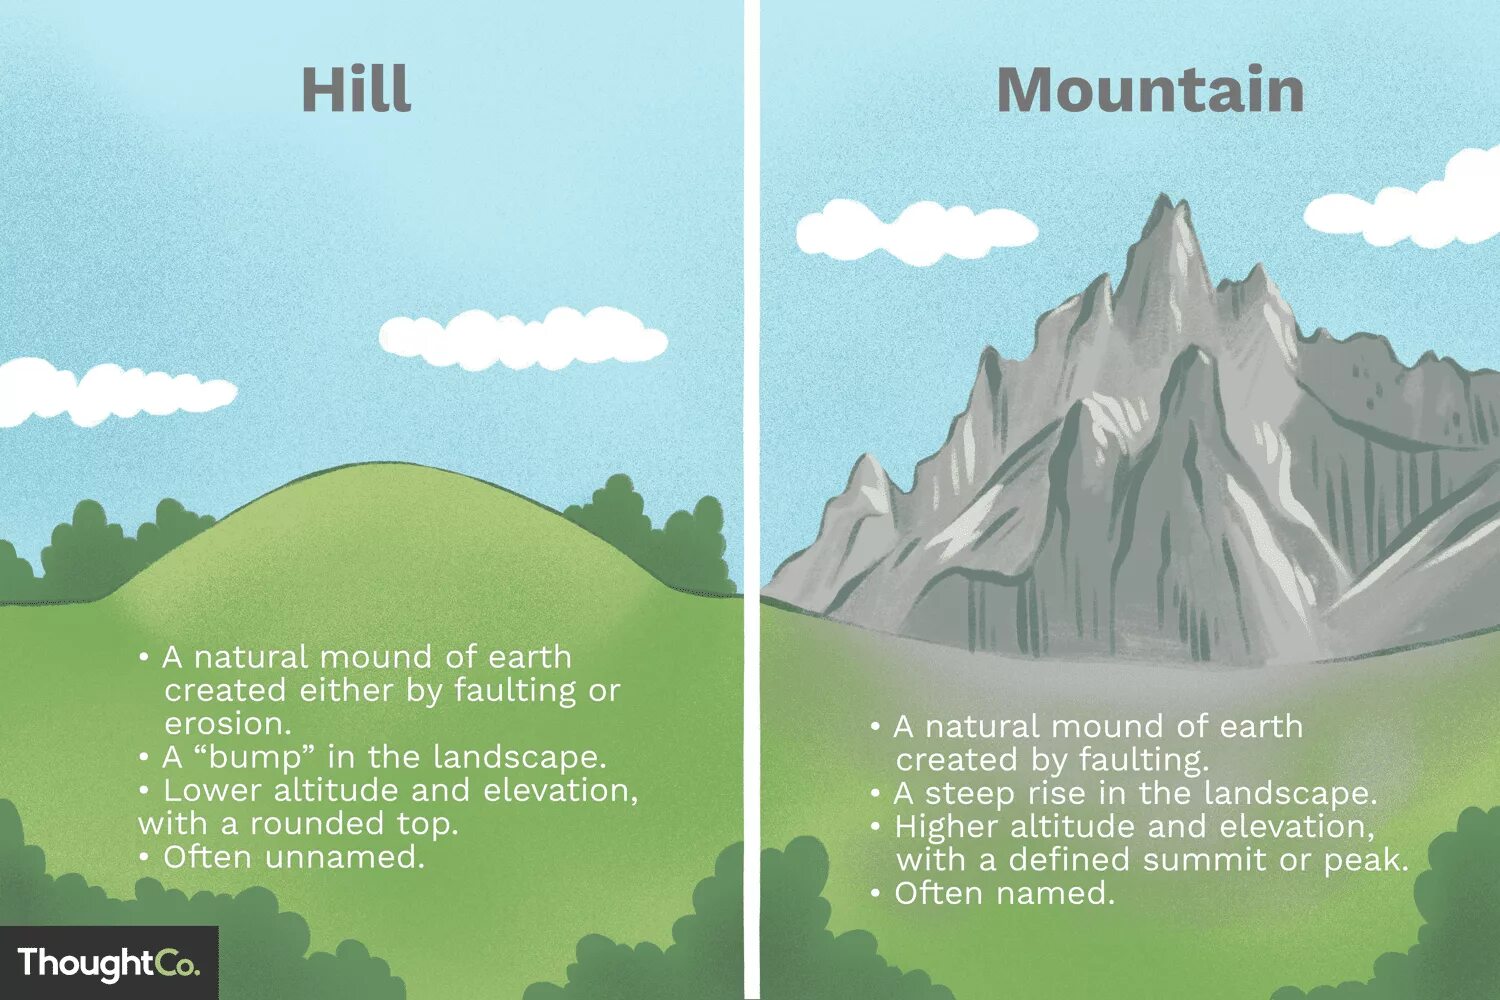 Hill Mountain разница. Иллюстрация холмы и горы. Различие холма и горы. Разница между горой и холмом. Земля и небо сколько страниц